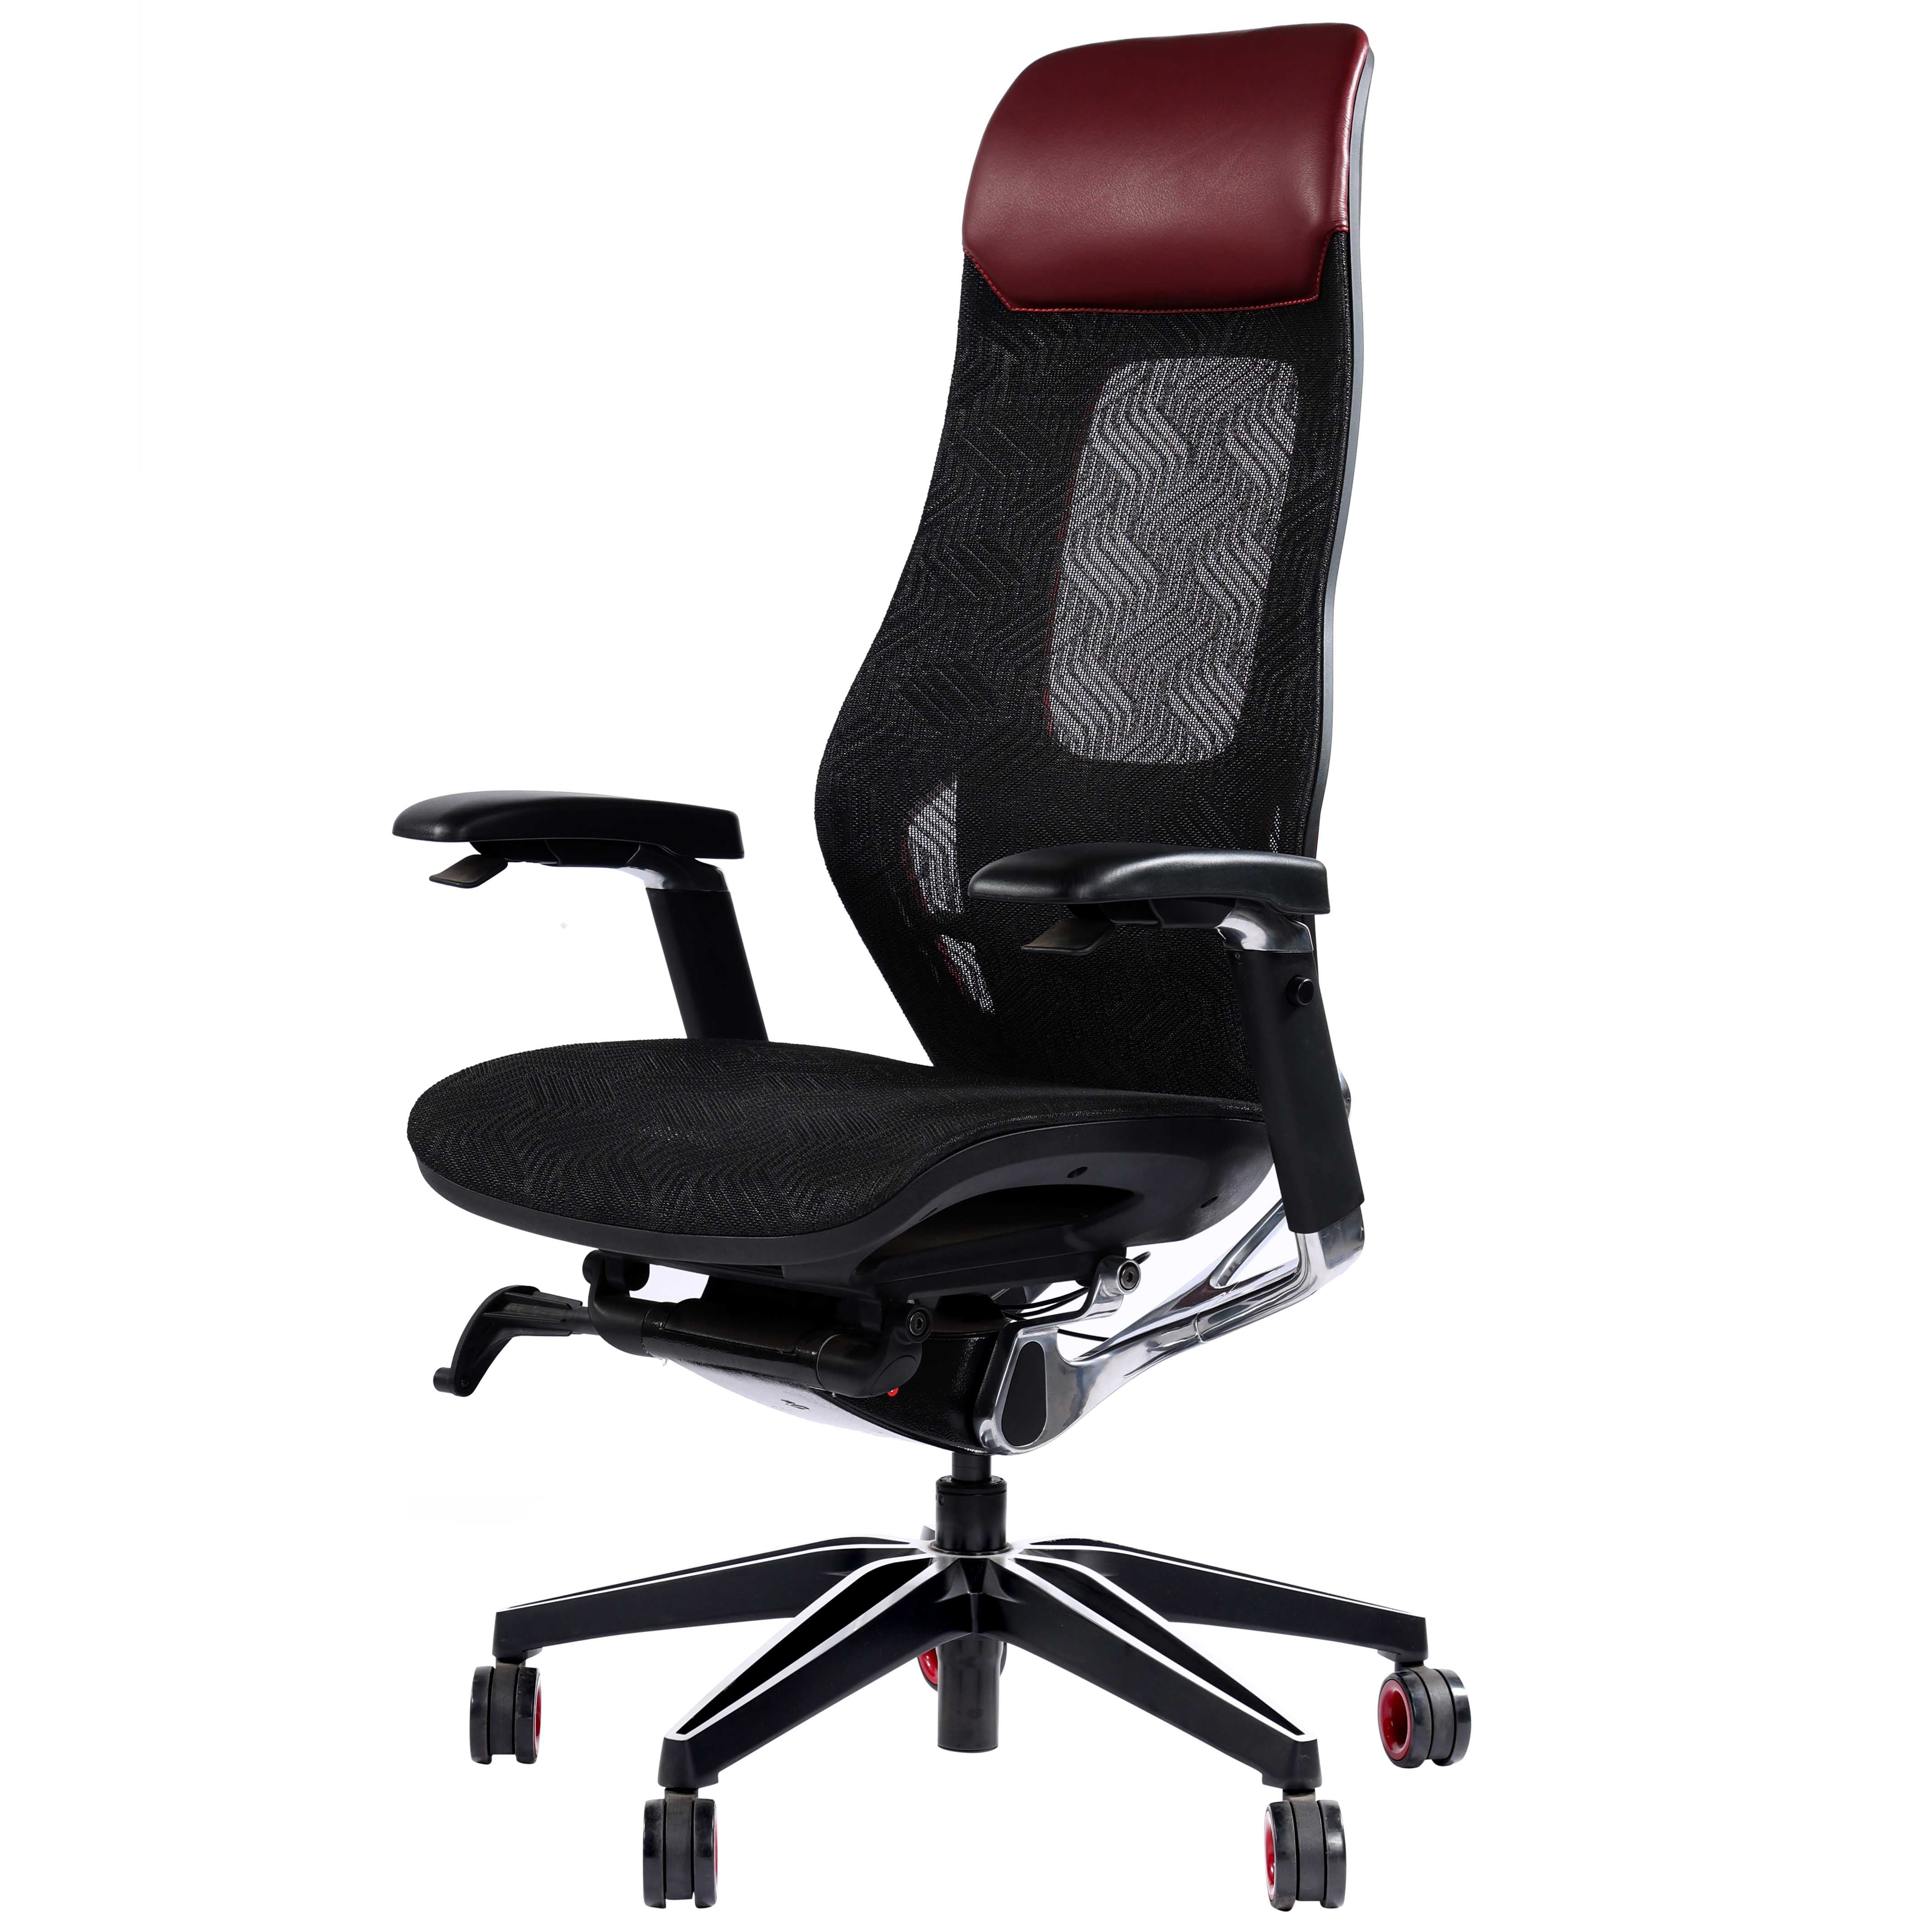 Ronald Top Line Premium Executive Ergonomic Office Chair - Red & Black Chair urbancart